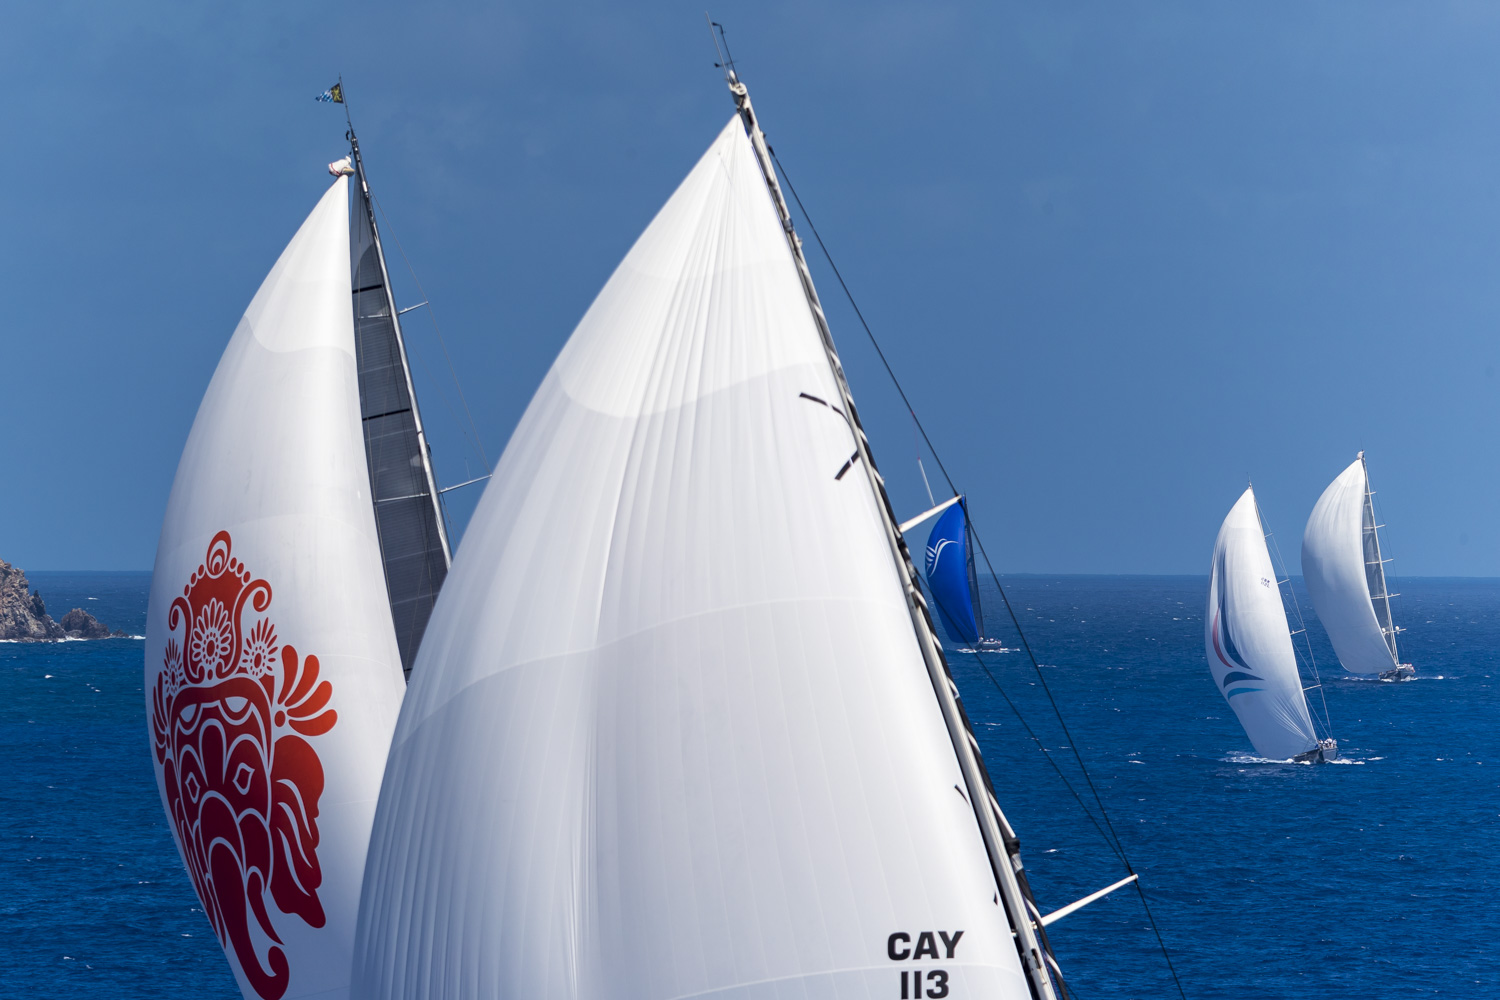 Foto 12 marzo online  - Loro Piana Caribbean superyacht Regatta & Rendezvous - News - Yacht Club Costa Smeralda